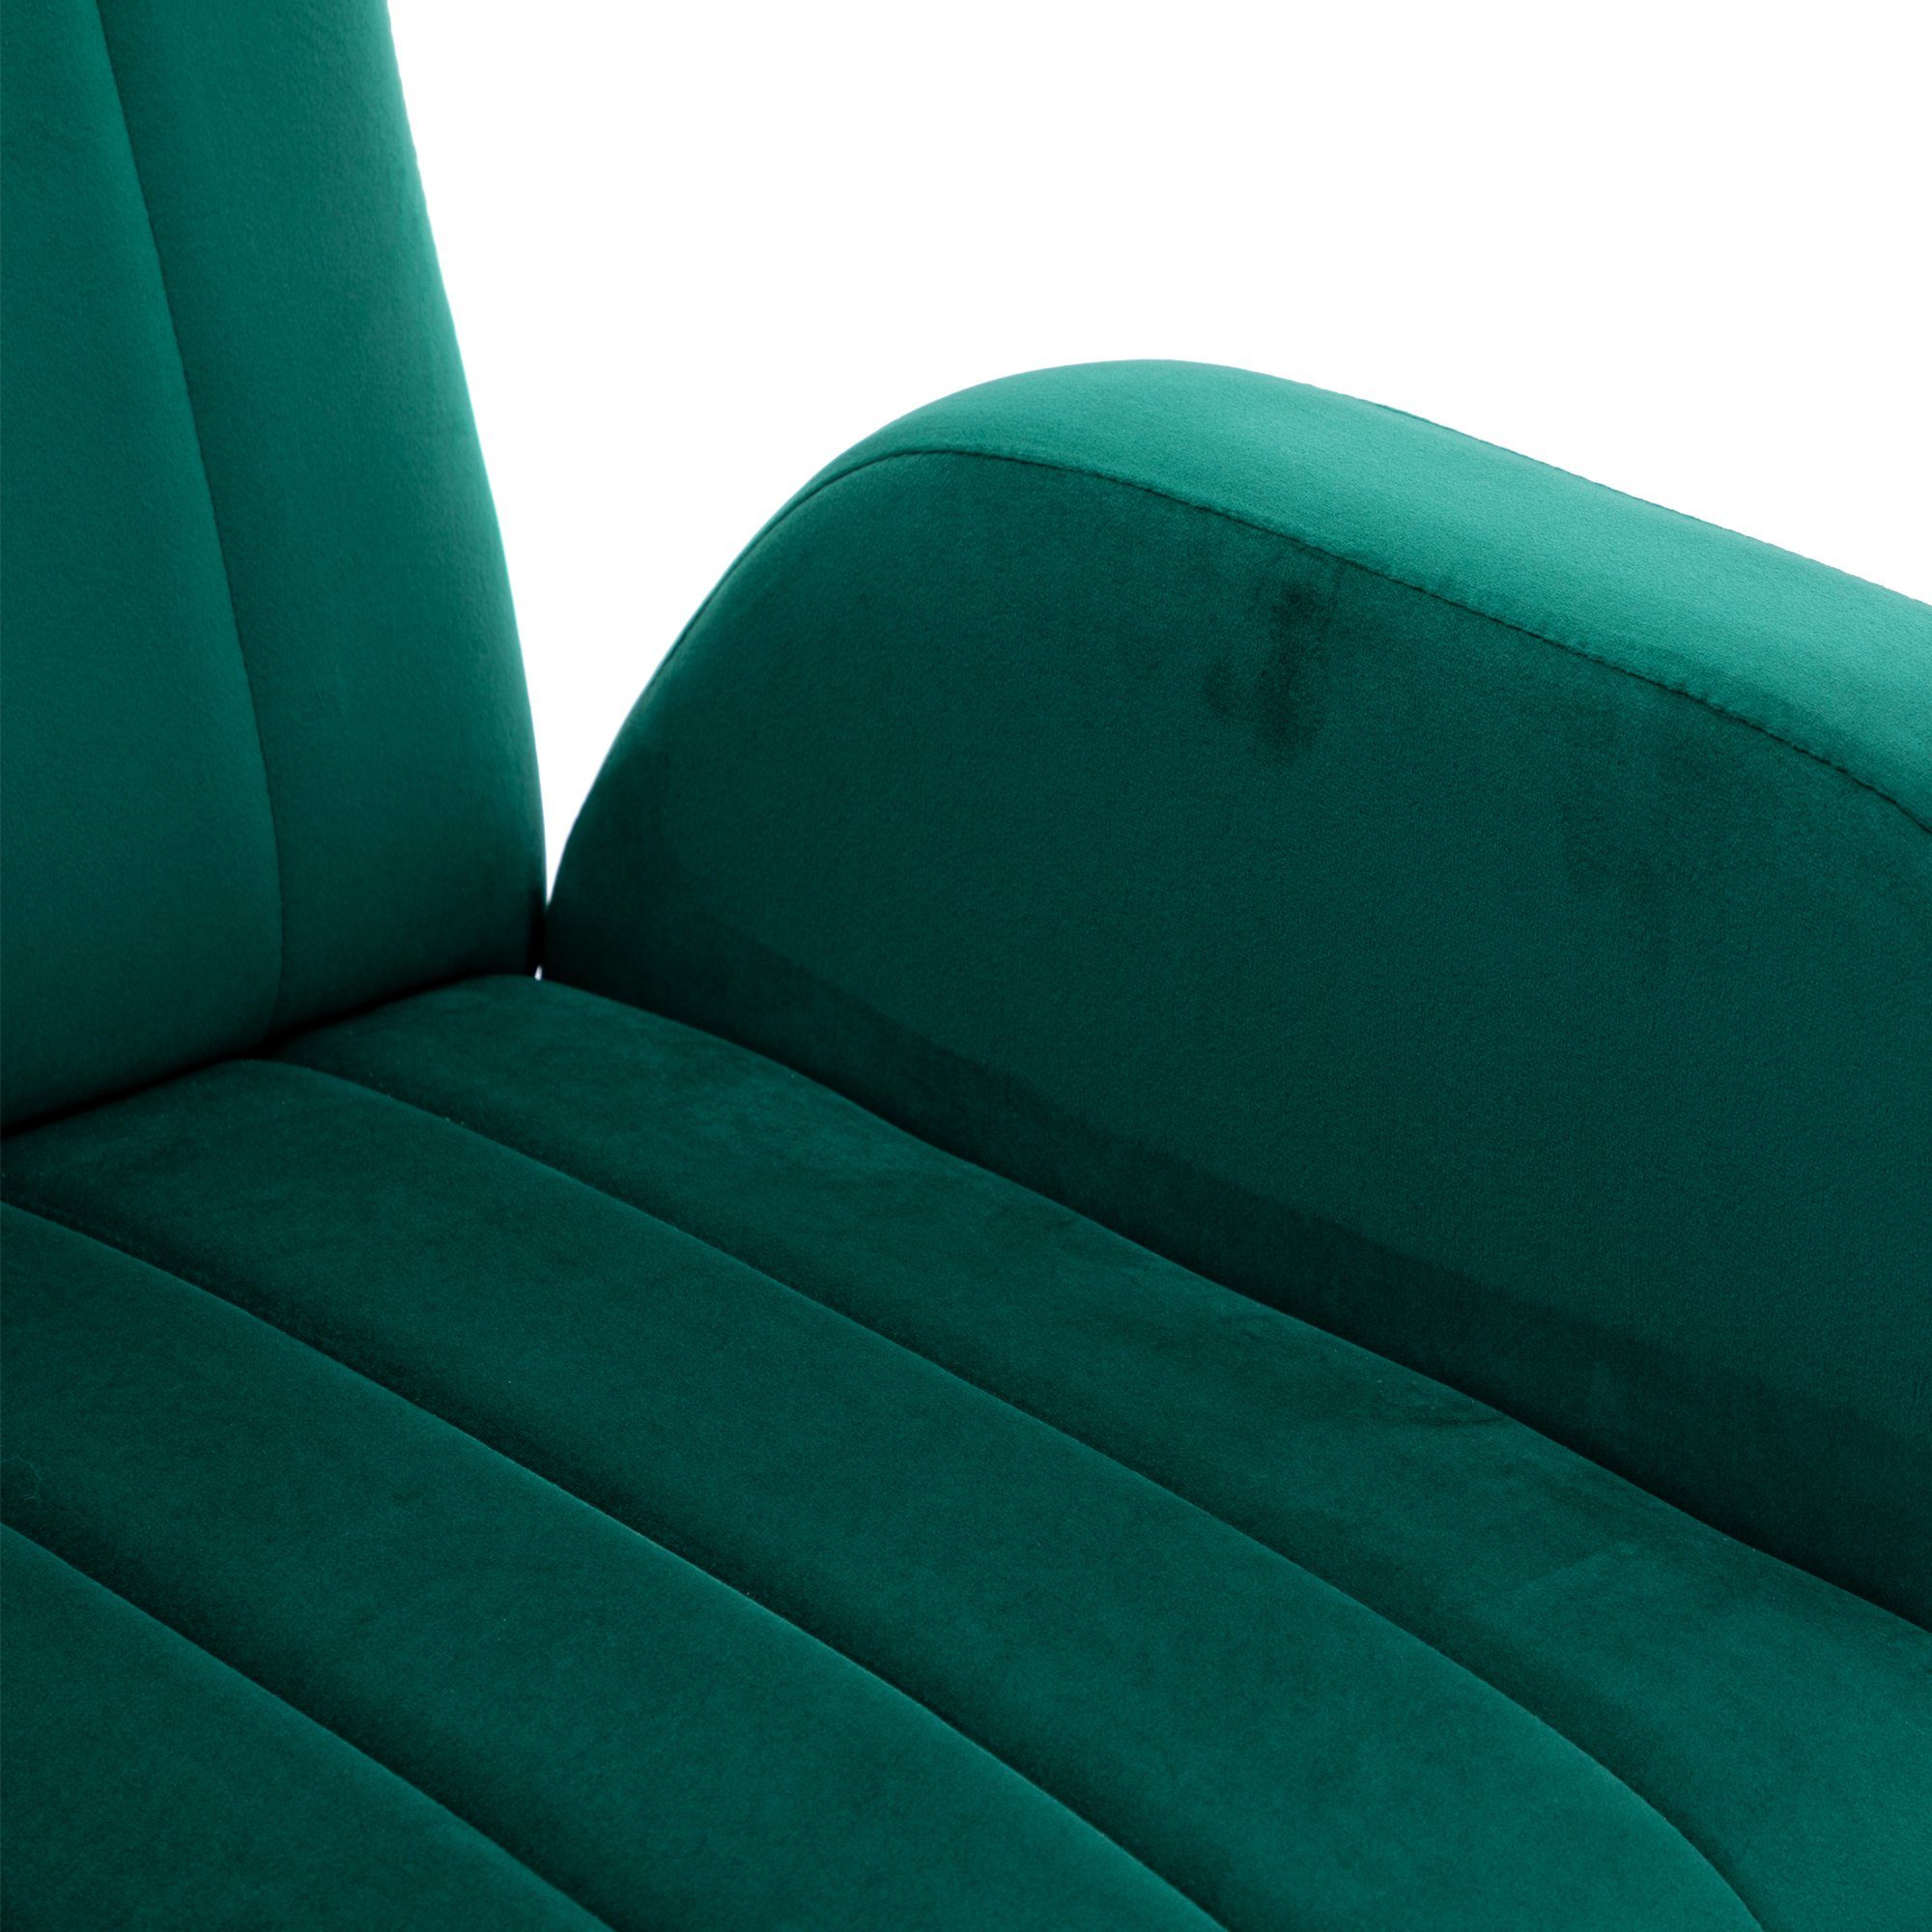 Odikalo Loungesessel Einzelsofa Akzent Stuhl gepolstert Füßen goldene Grün Freizeit mehrfarbig